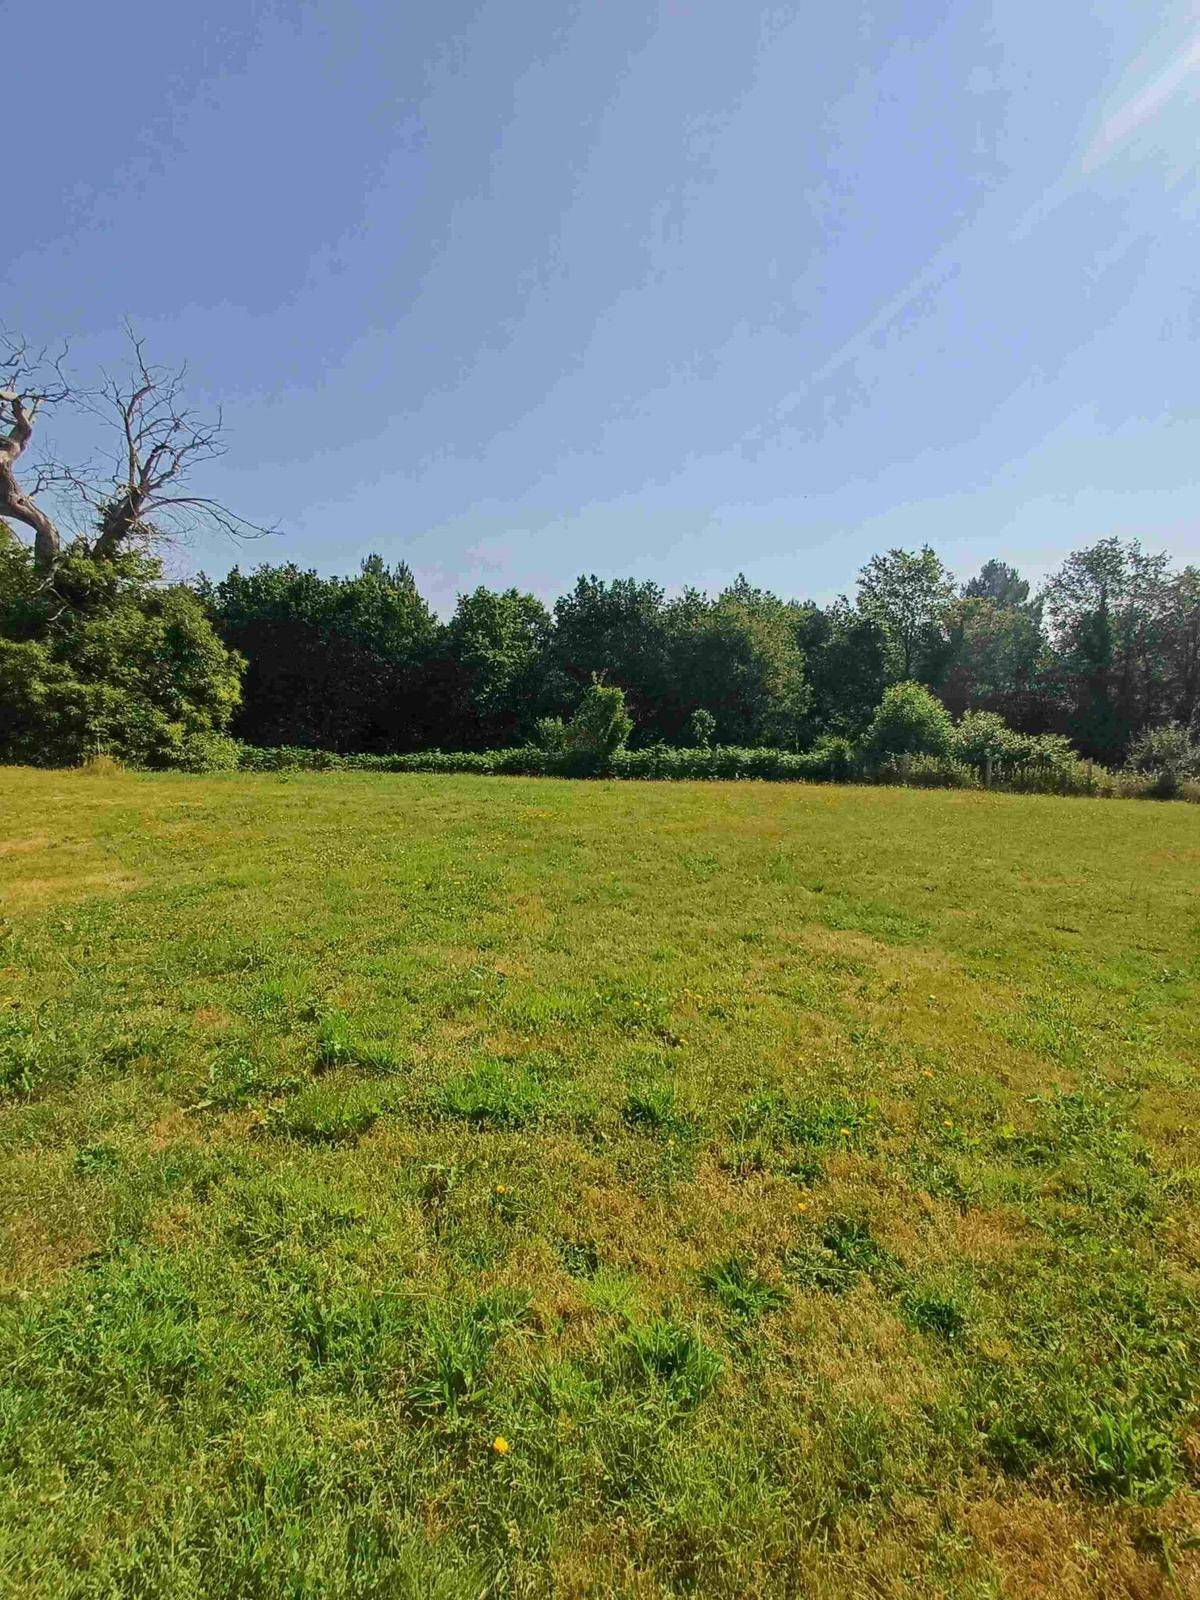 Terrain seul à La Bazoge en Sarthe (72) de 1385 m² à vendre au prix de 100000€ - 2